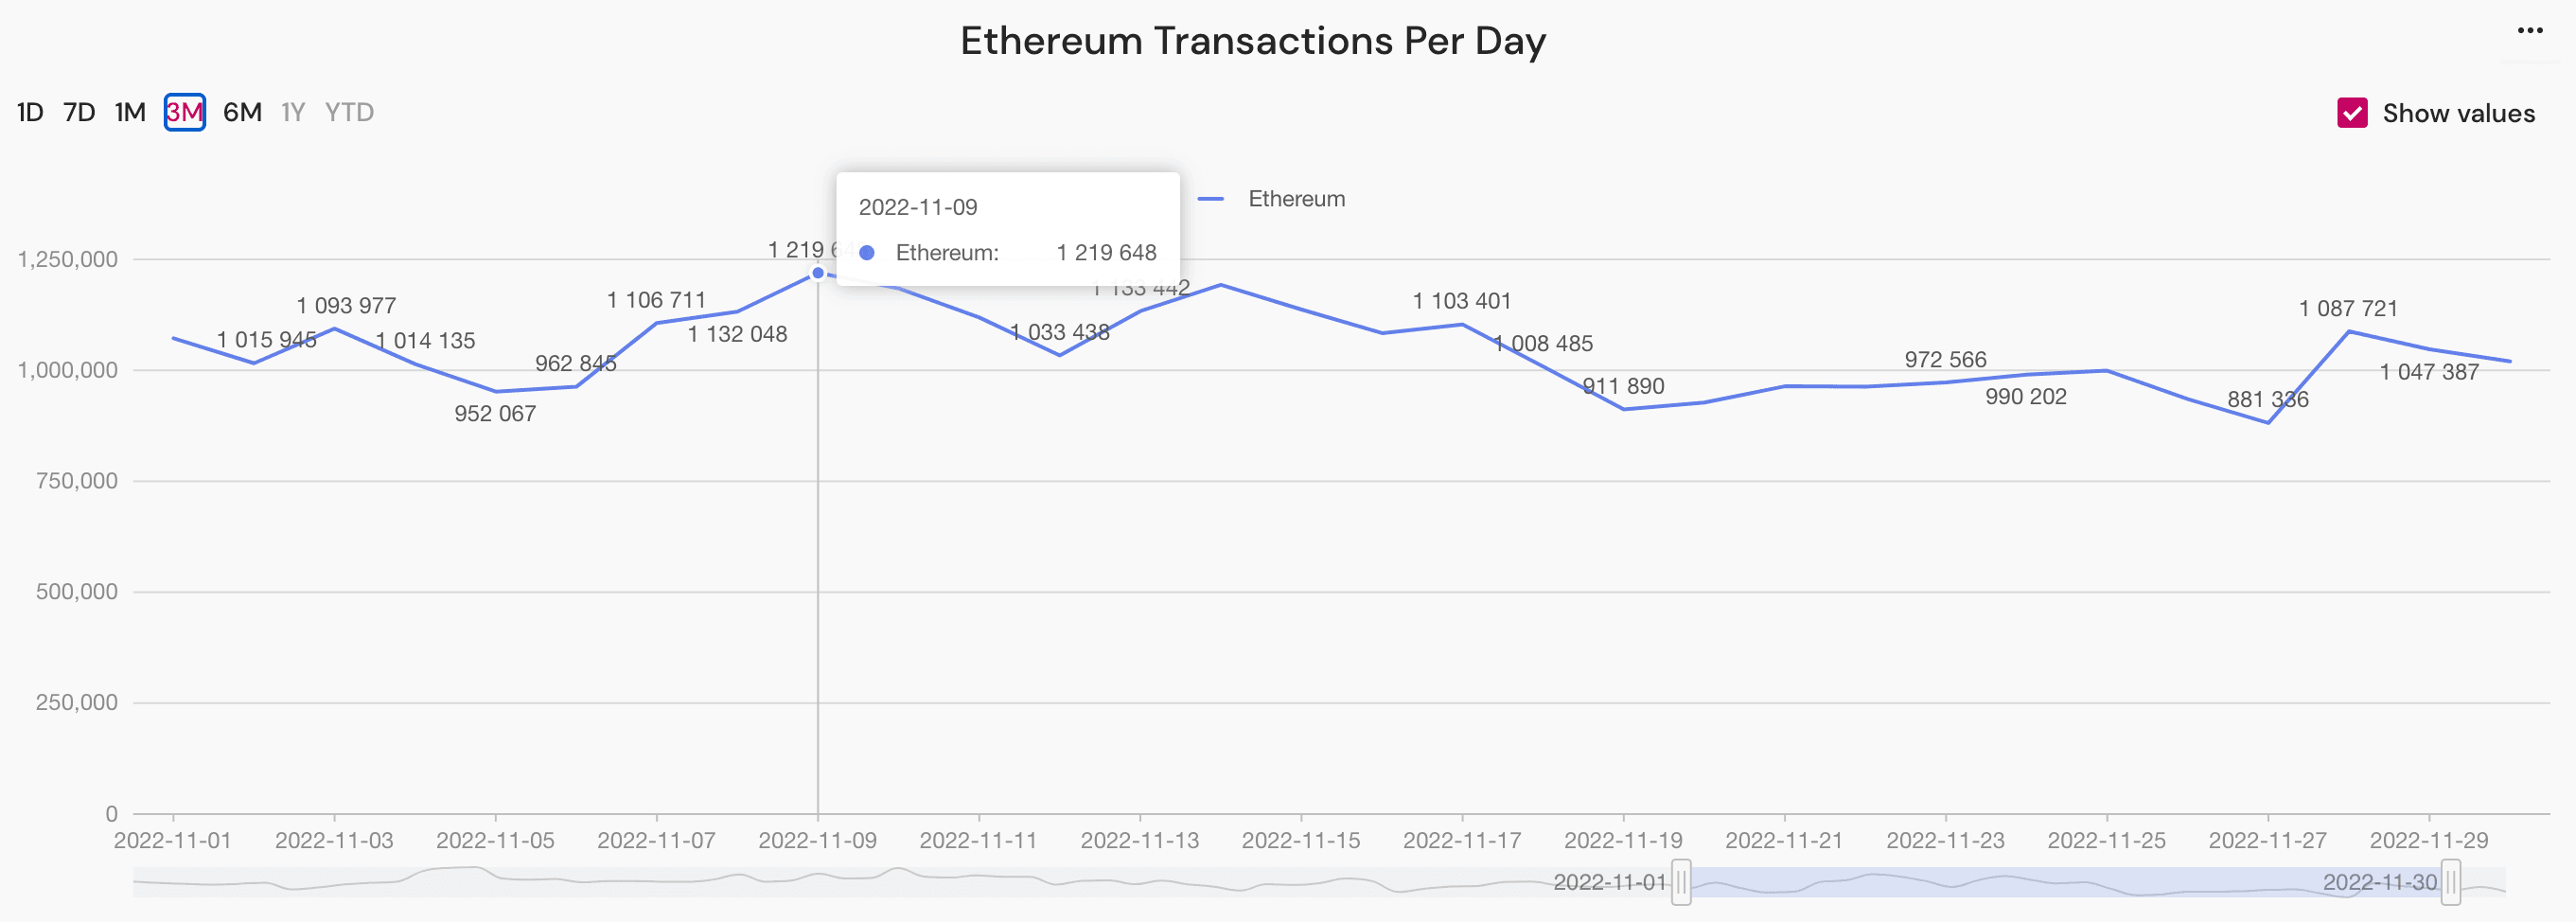 ethereum transactions peak, November 2022